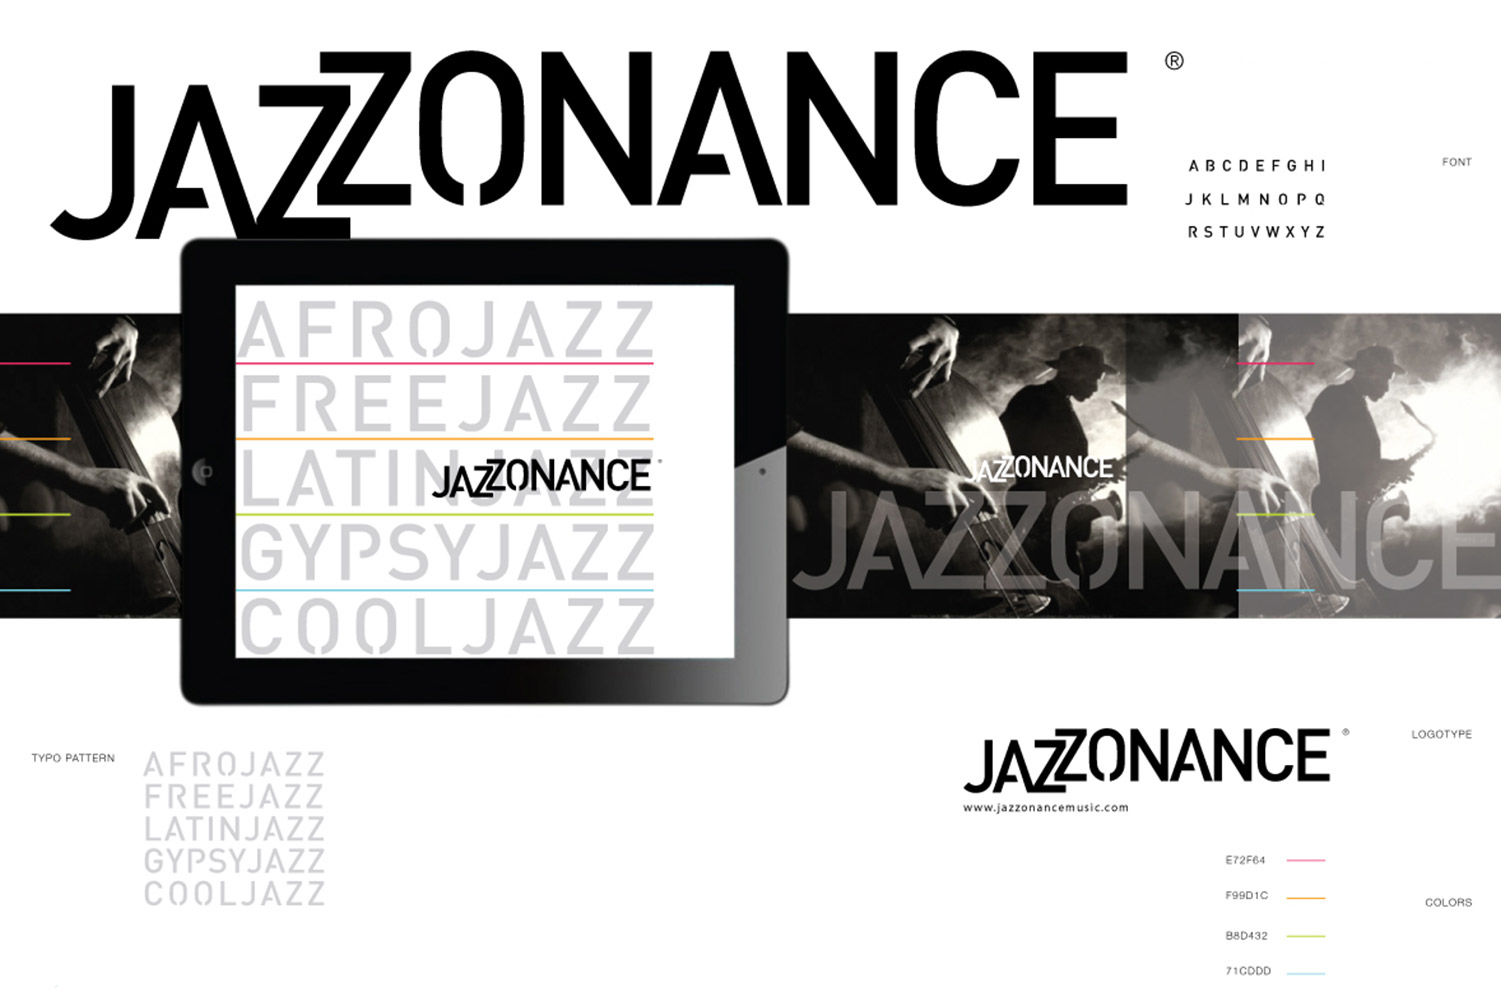 Jazzonance, corporate identity image